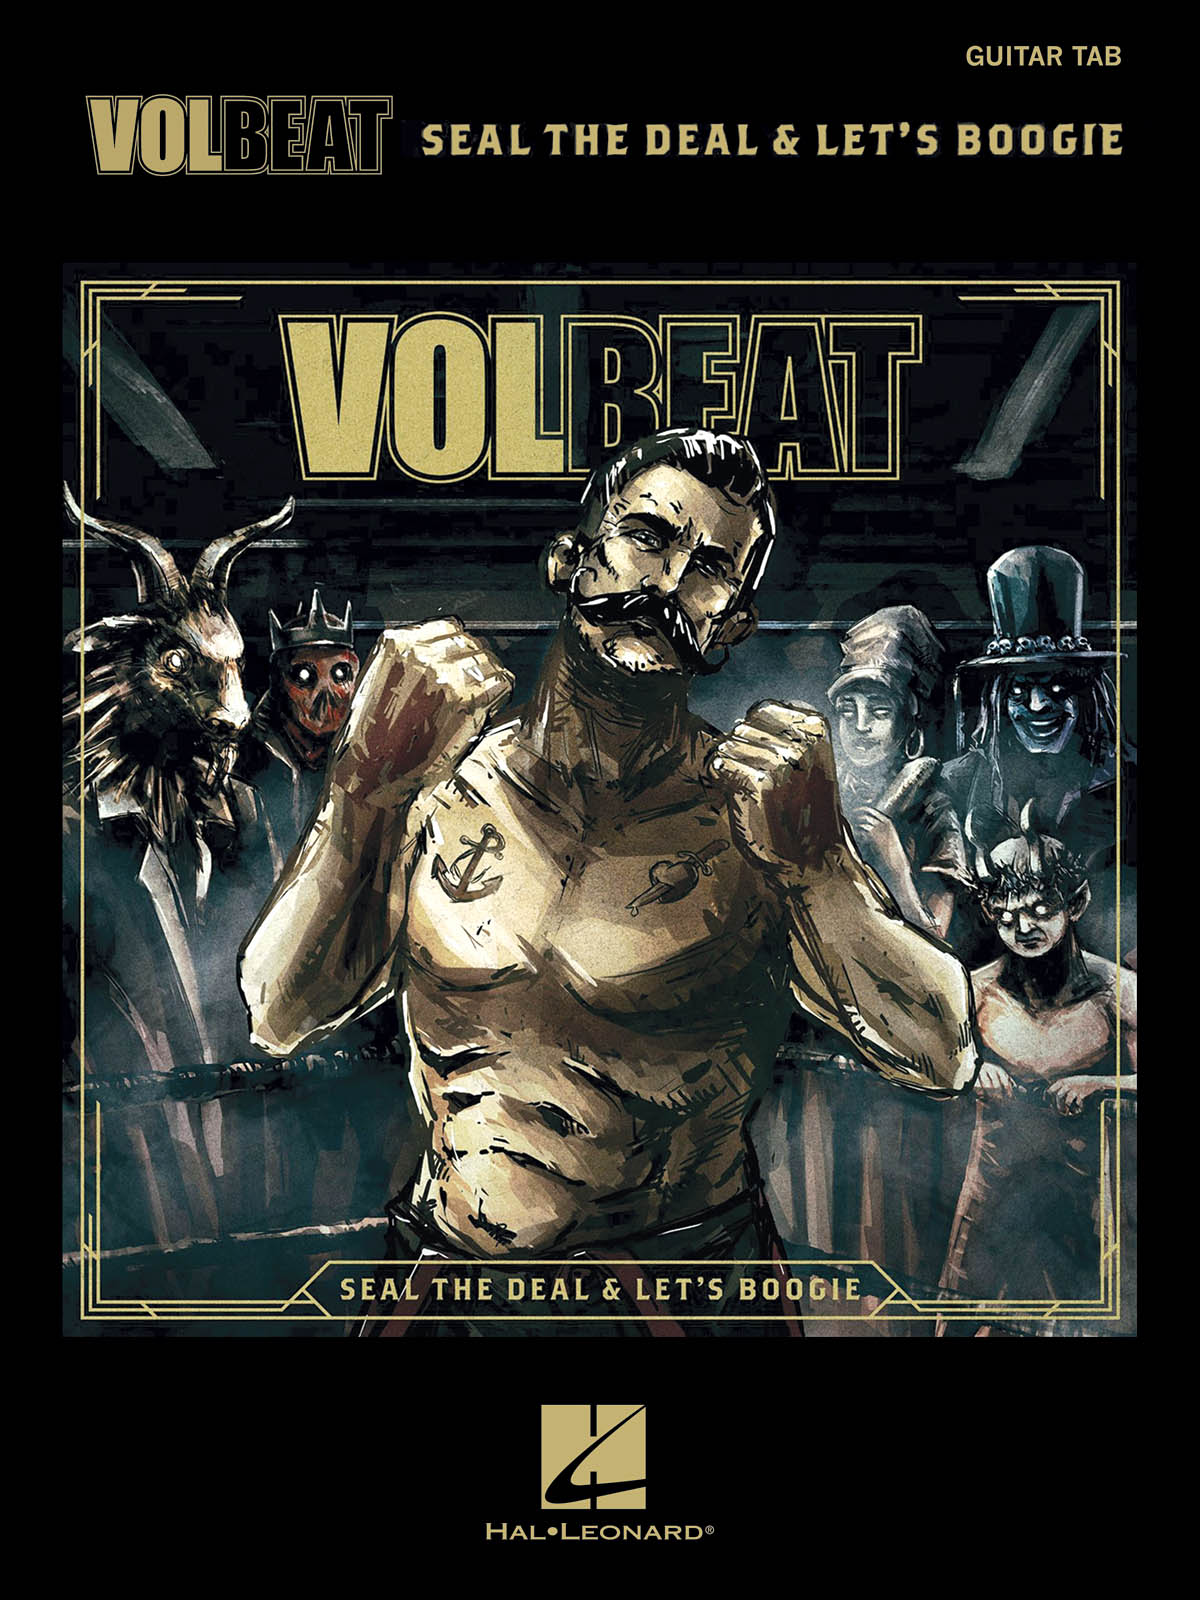 Volbeat - Seal The Deal & Let's Boogie - Tab Transcriptions with Lyrics - písně na kytaru s TAB